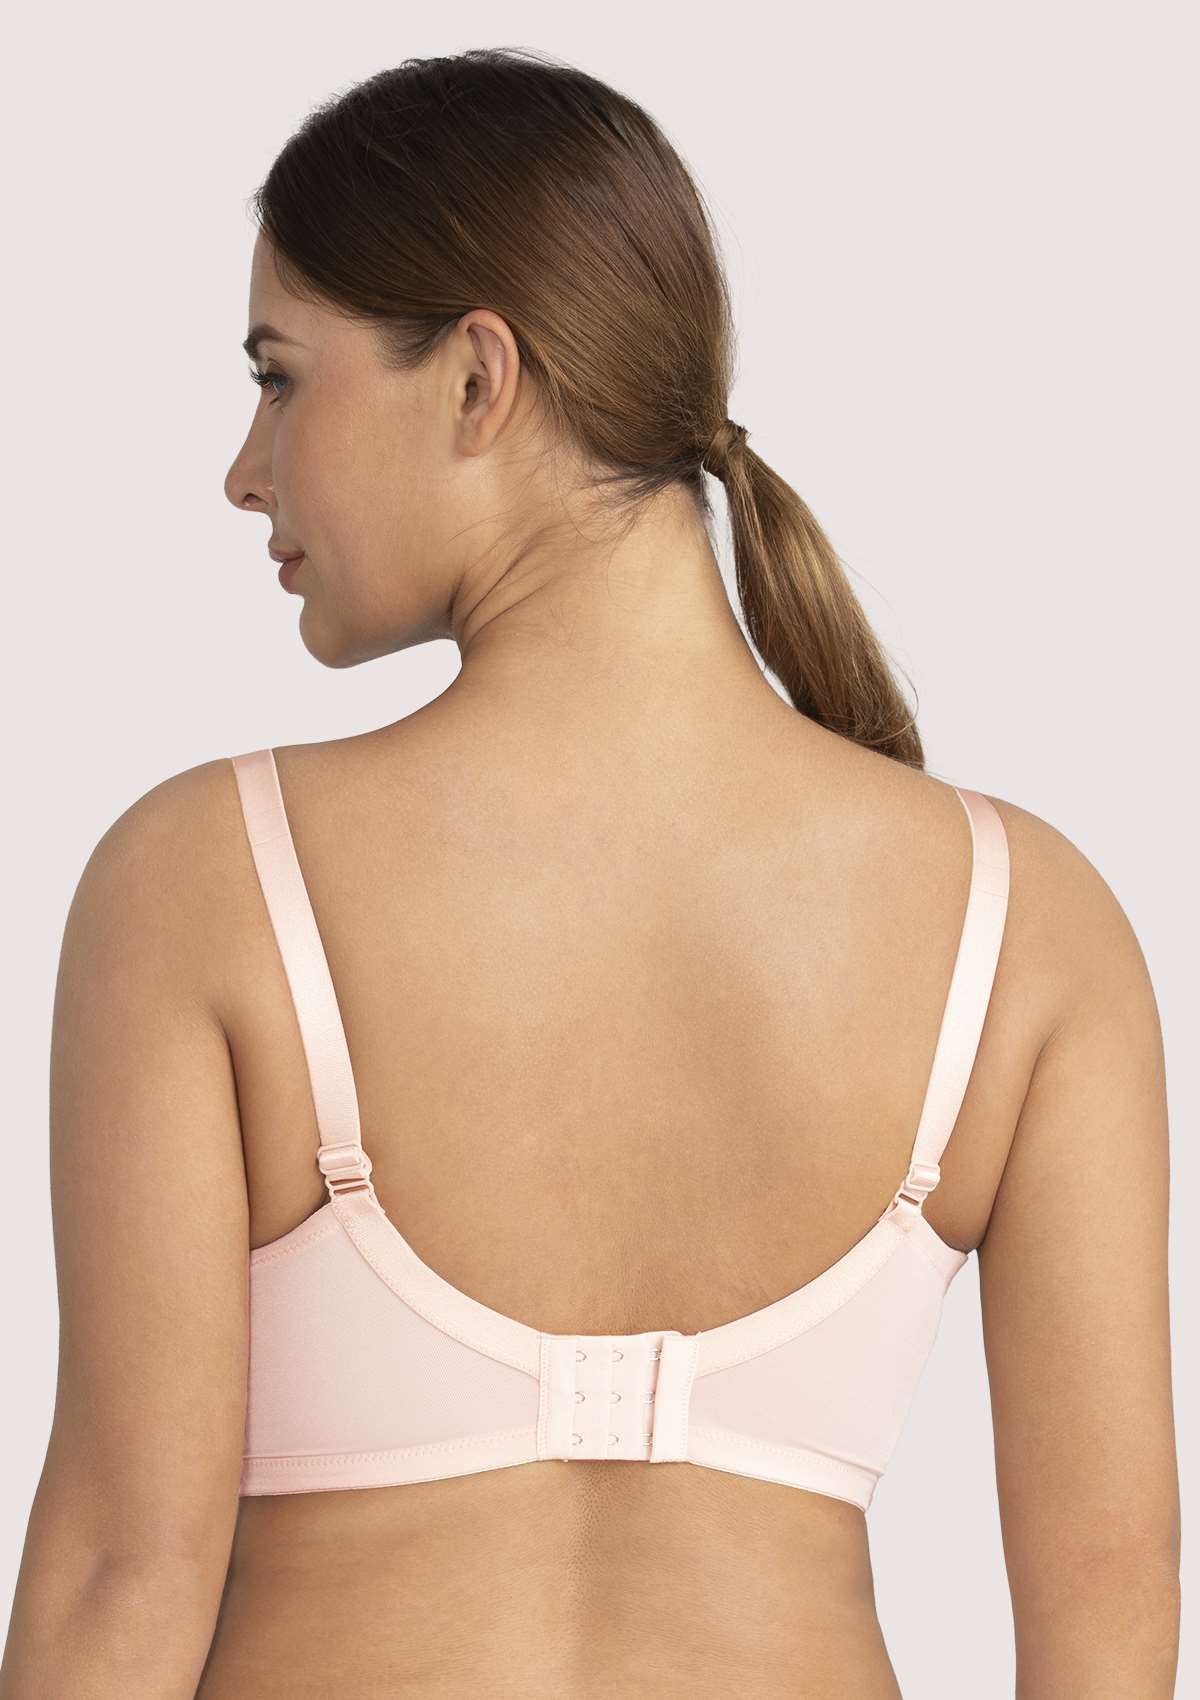 HSIA Sunflower Matching Bra And Panties Set: Comfortable Plus Size Bra - Pink / 40 / H